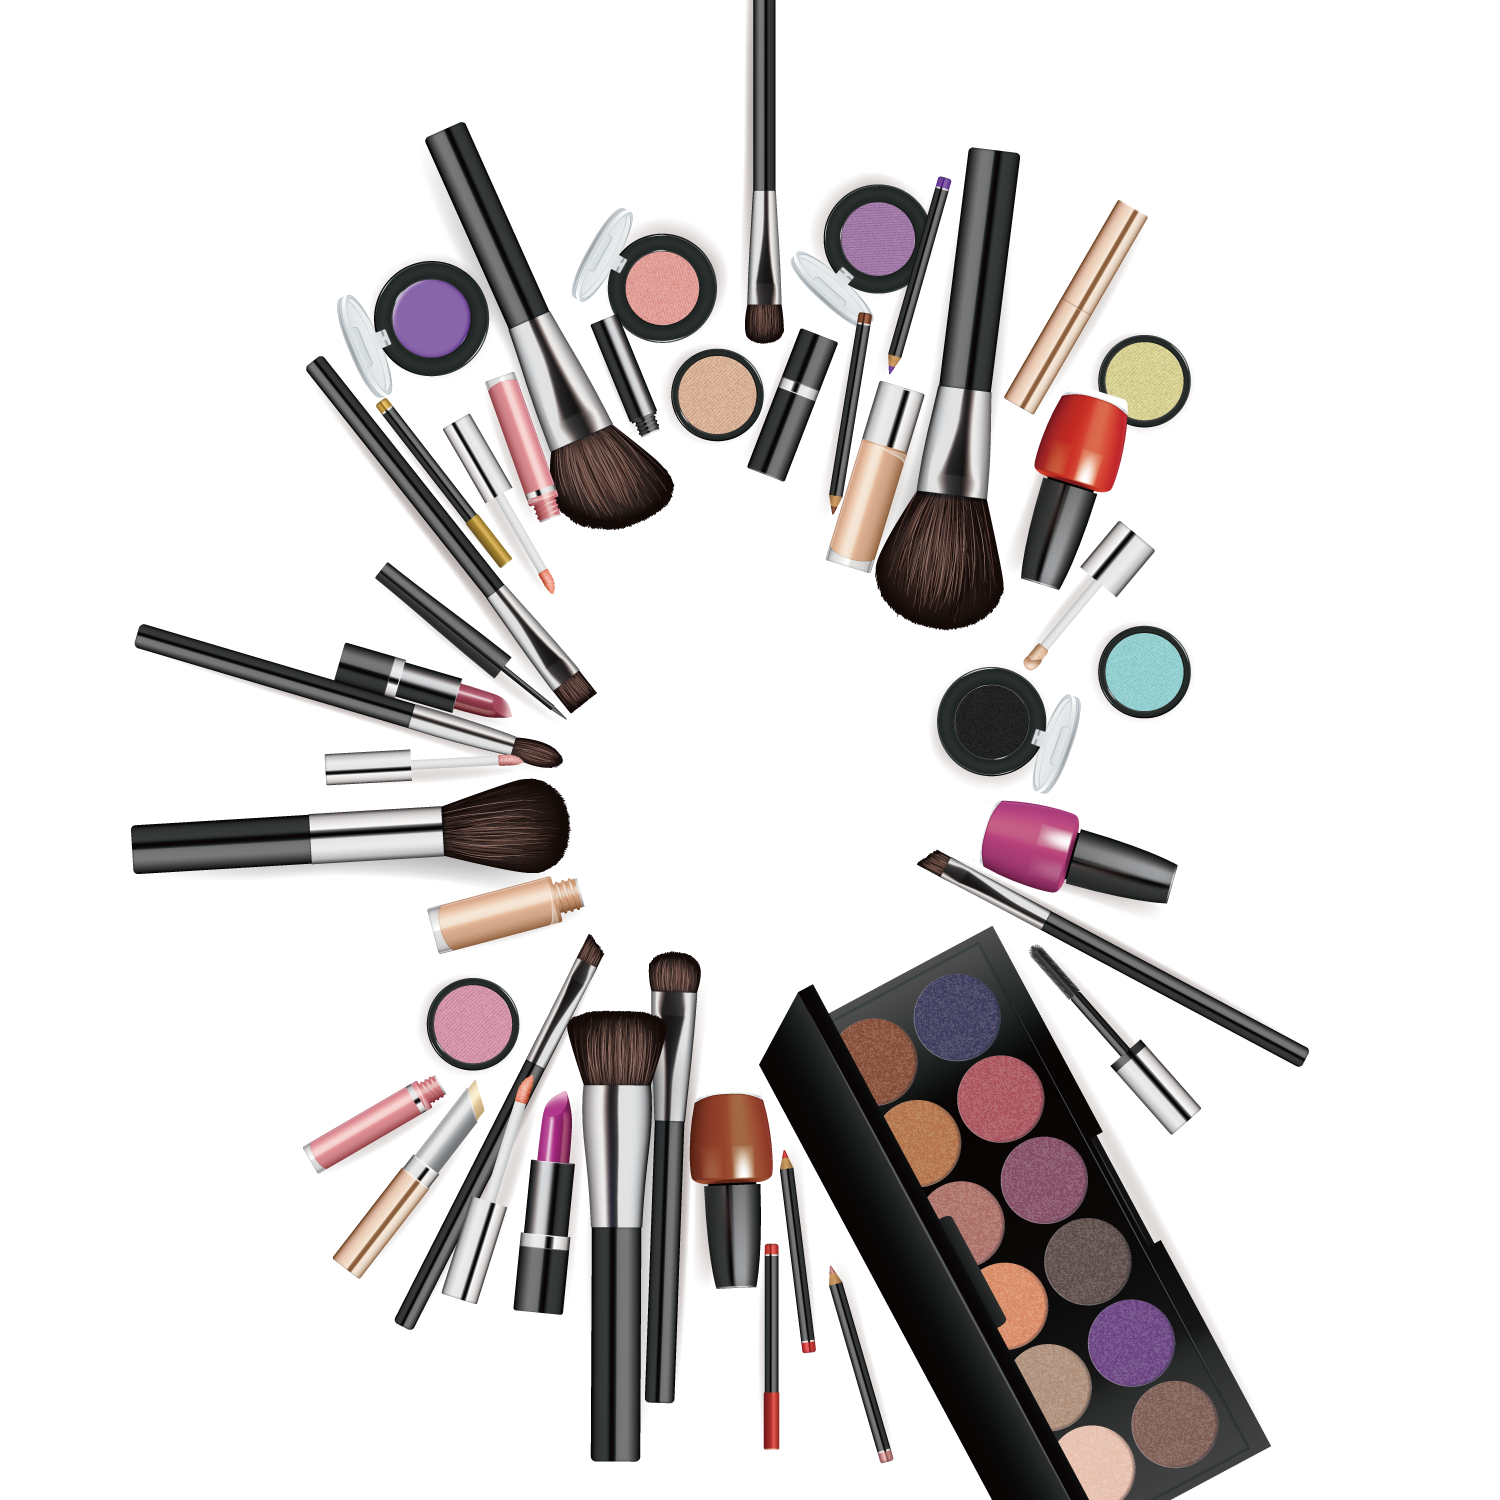 Cosmetics Makeup Brush Make Up Makeup Makeup New Posters Background Png Download 1500 1500 Free Transparent Cosmetics Png Download Clip Art Library